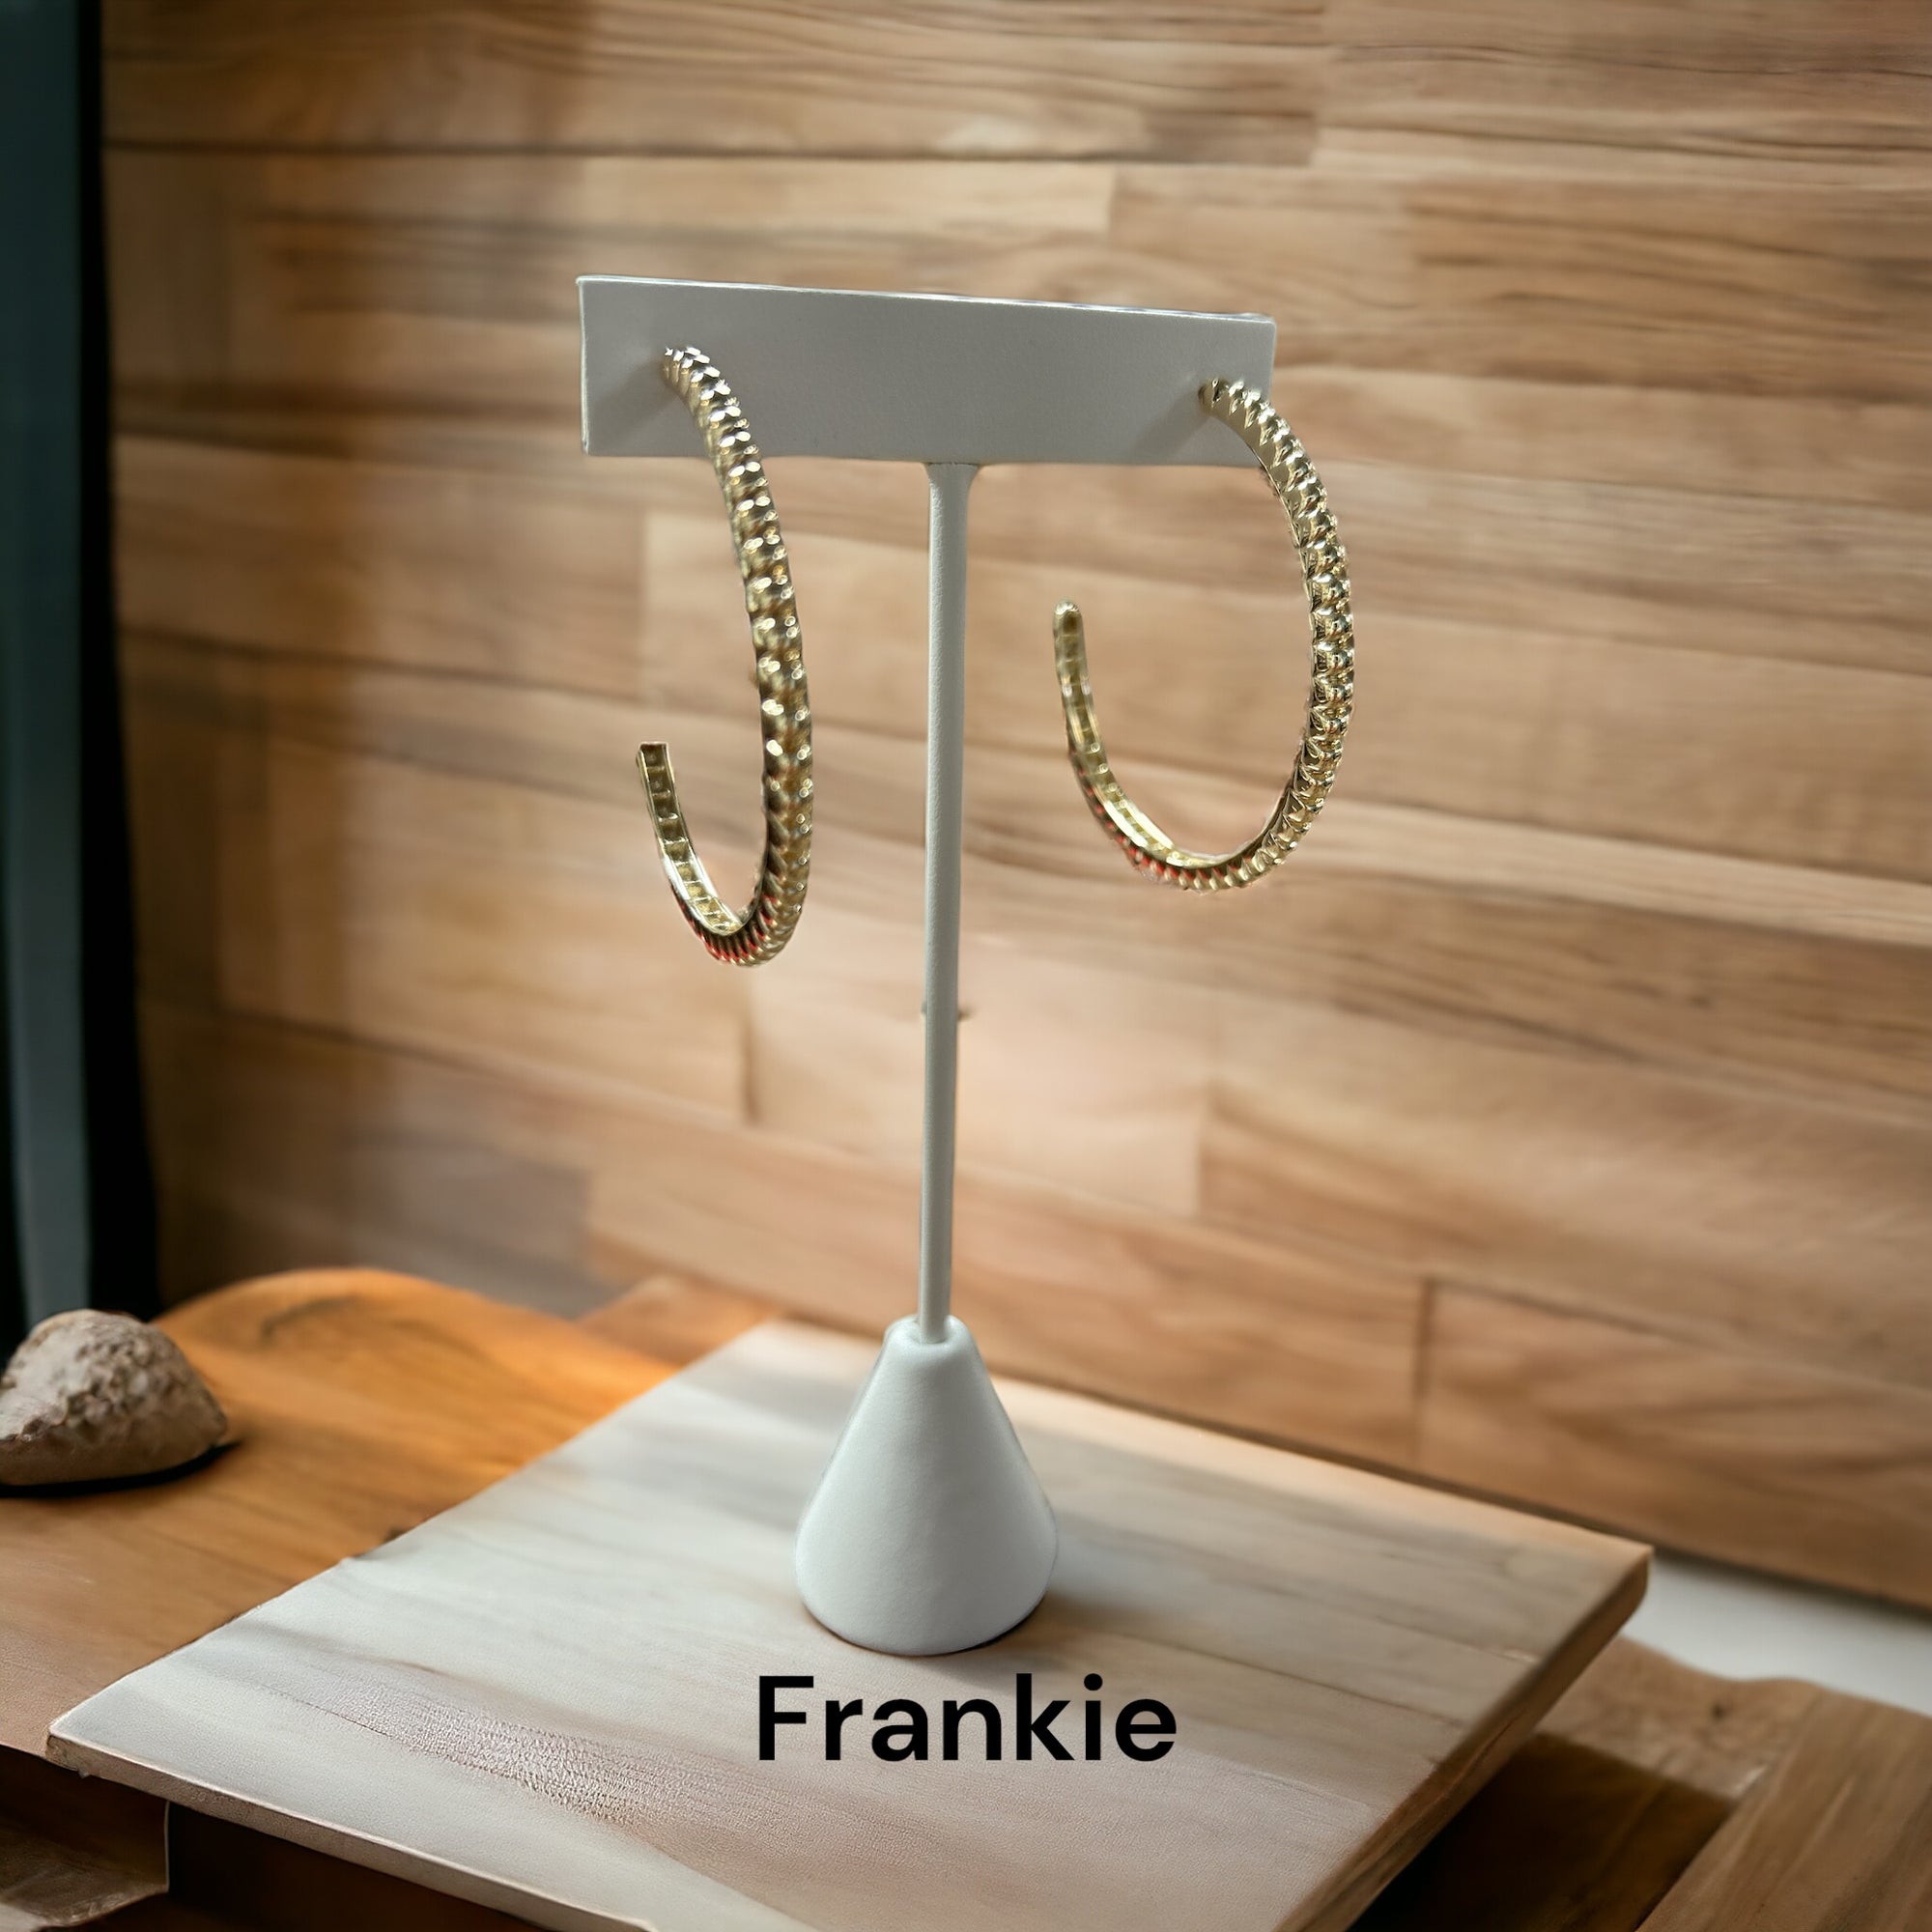 Frankie Earrings